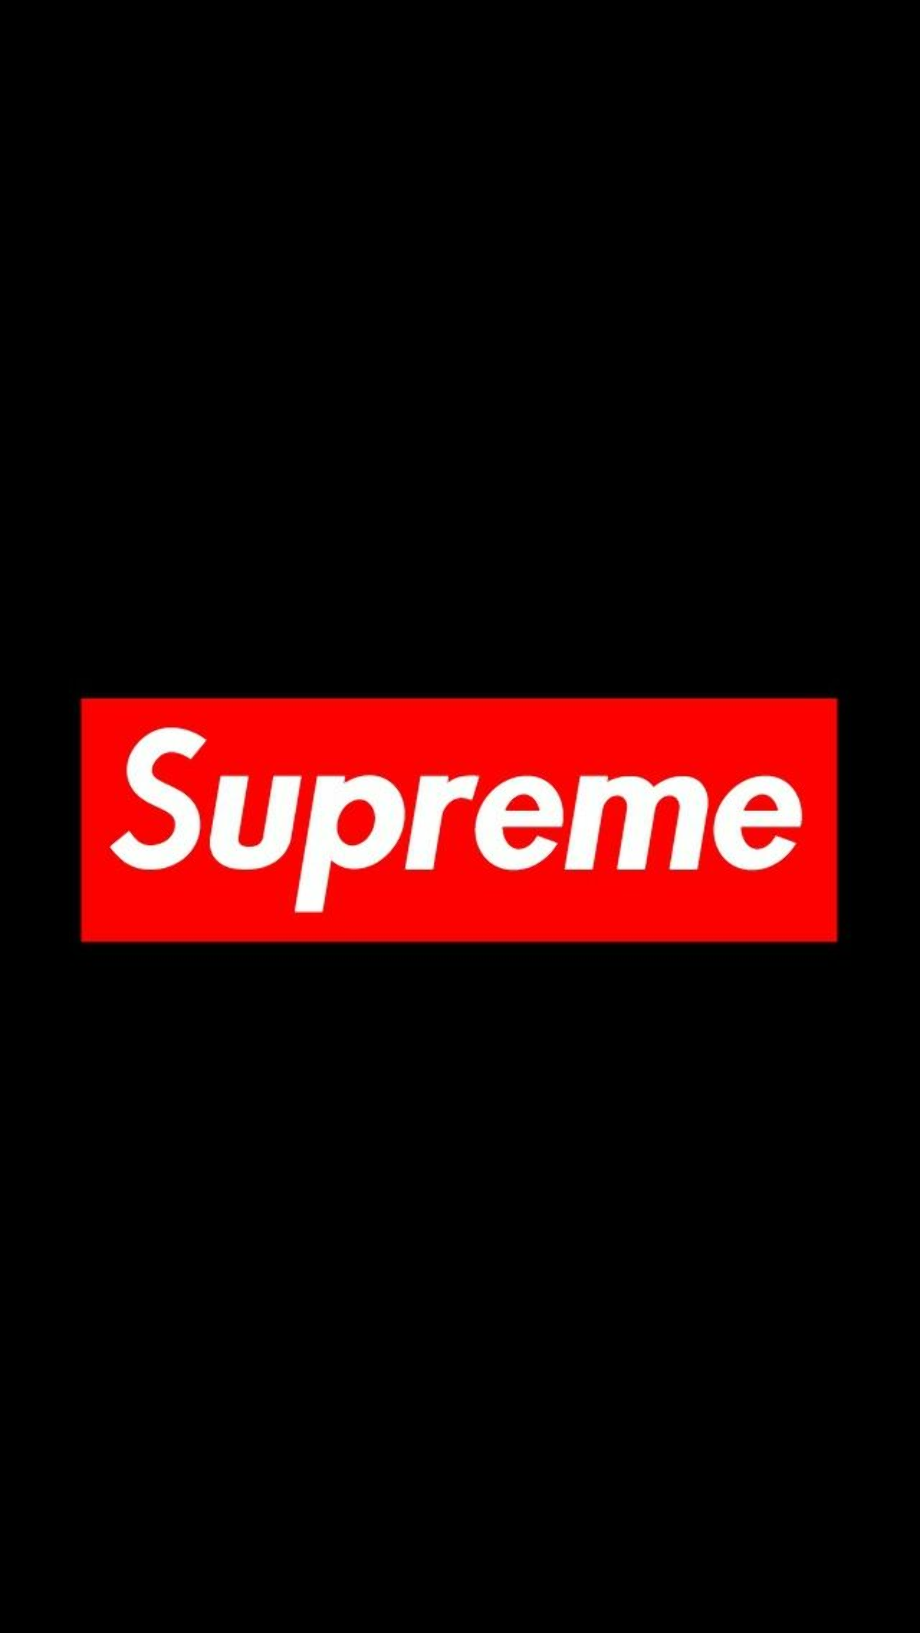 supreme logo high quality